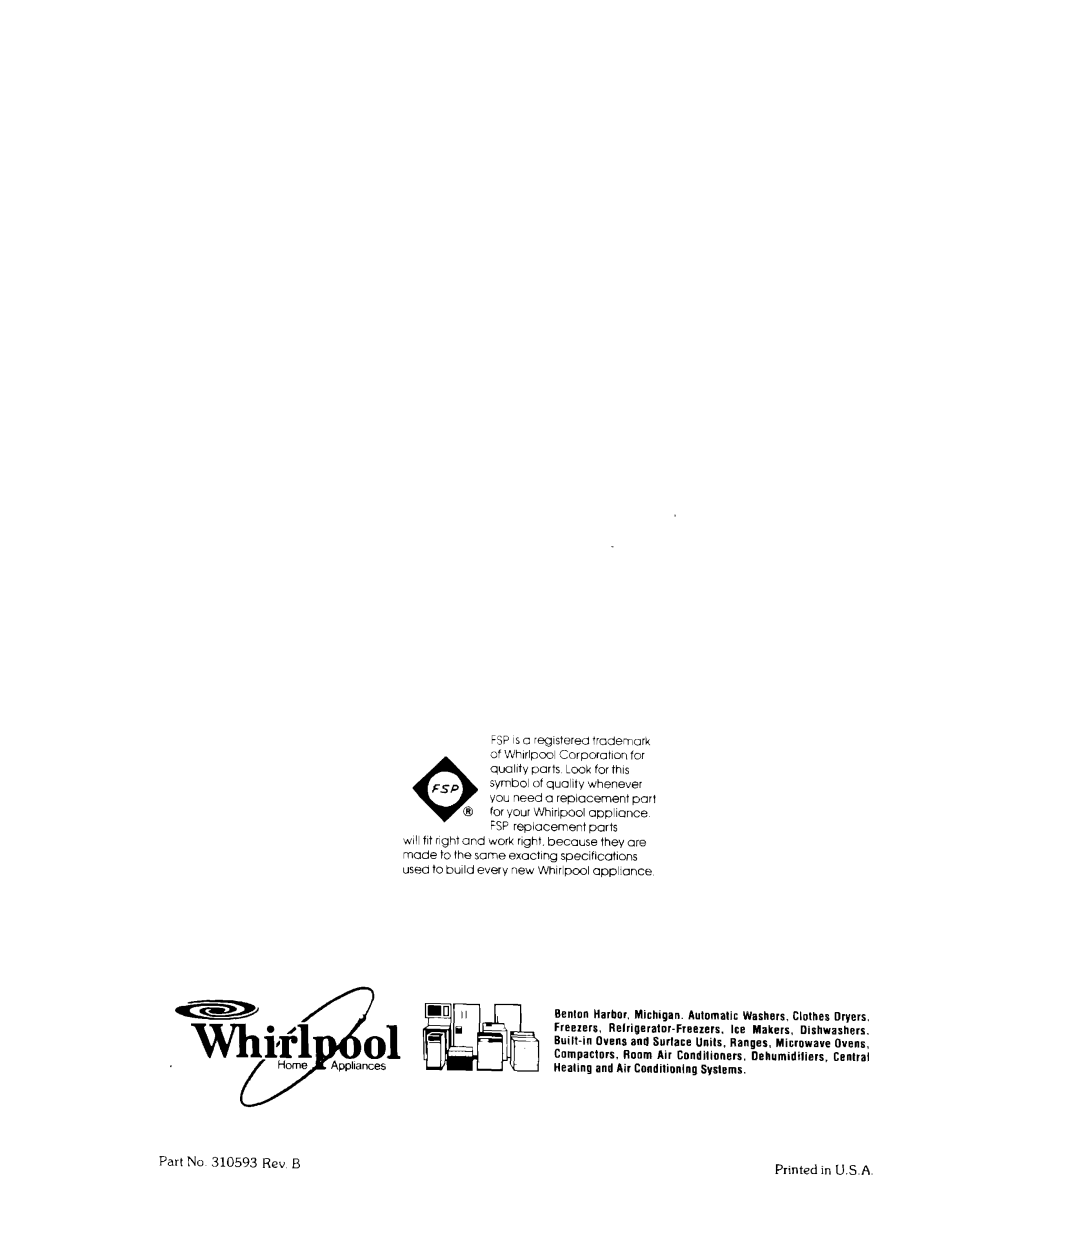 Whirlpool RJE-3020 manual Part No 310593 Rev B 